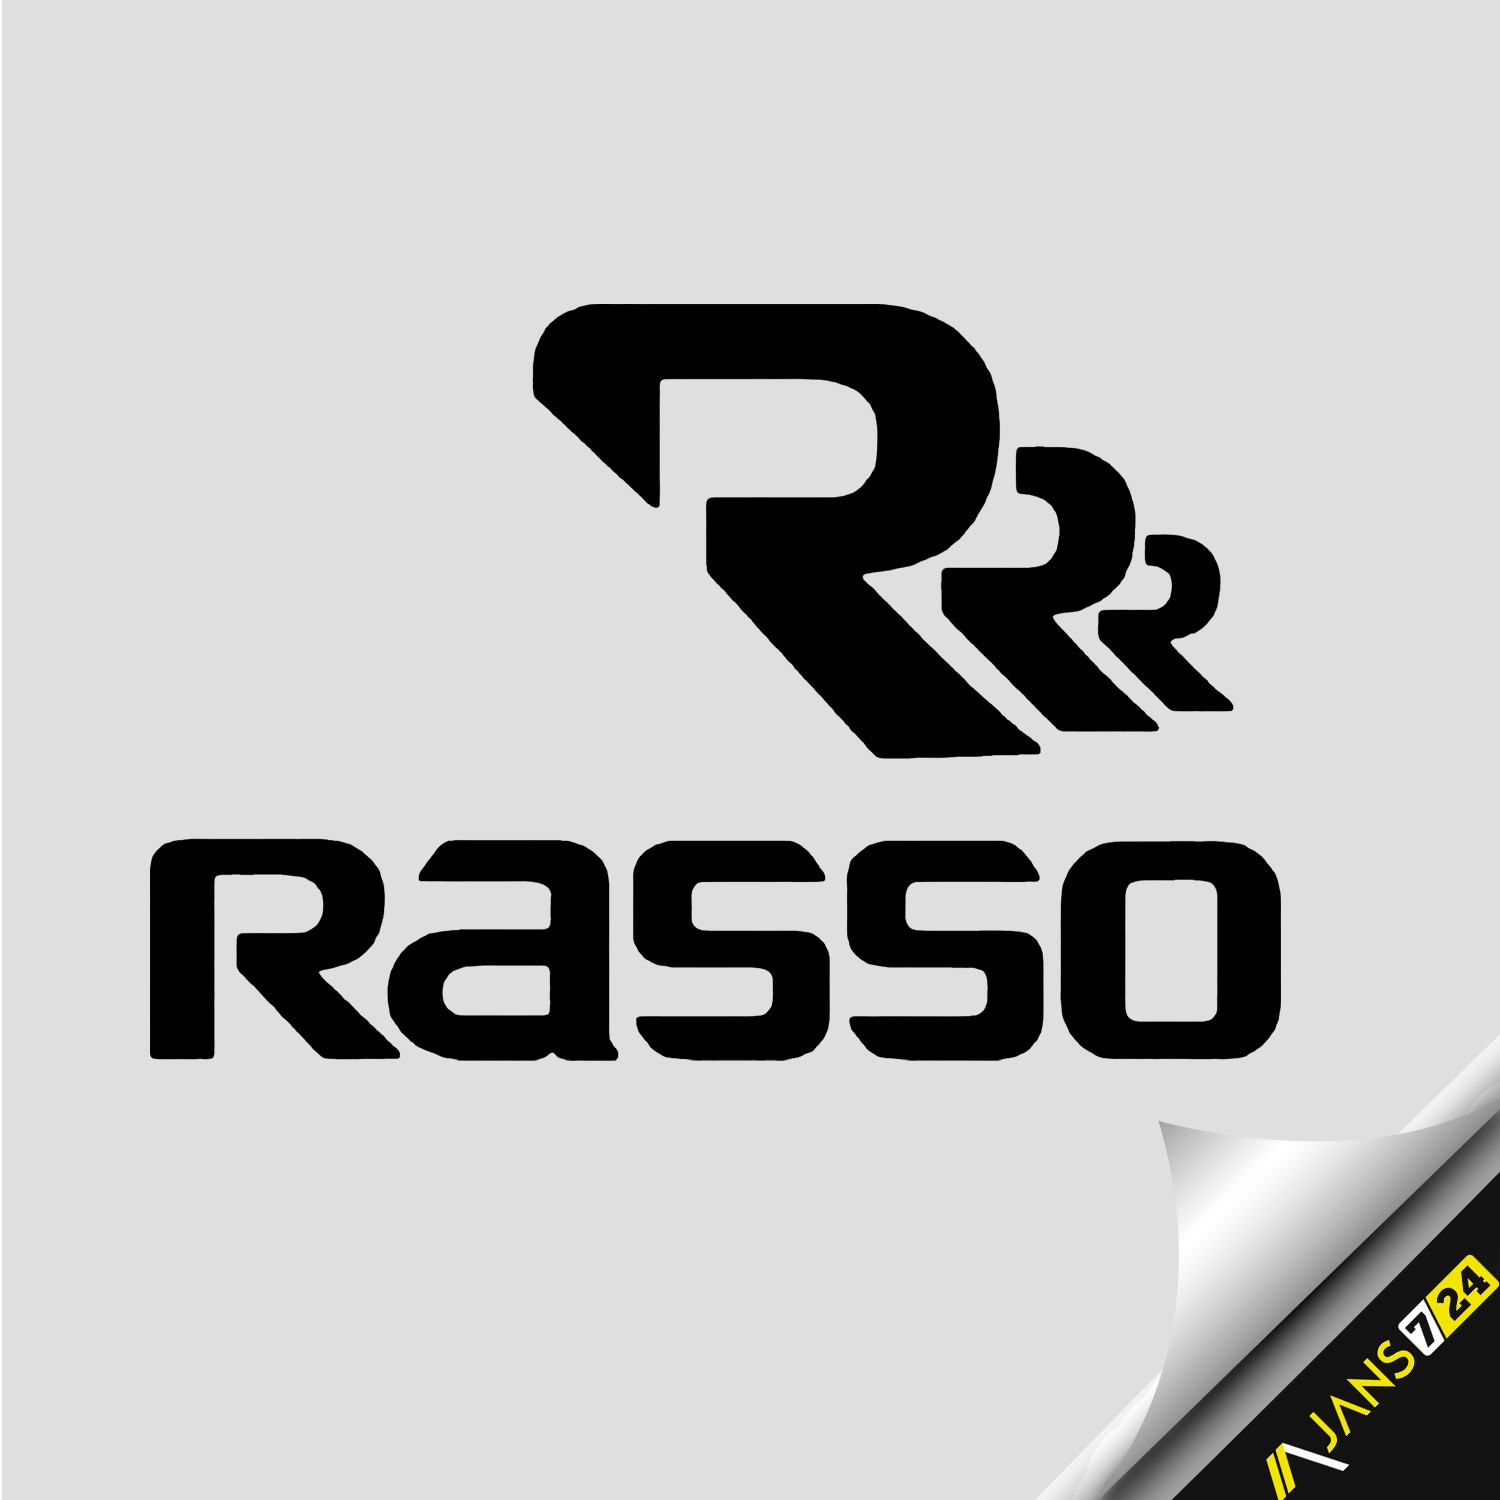 Rasso firmasına yaptığımız Logo